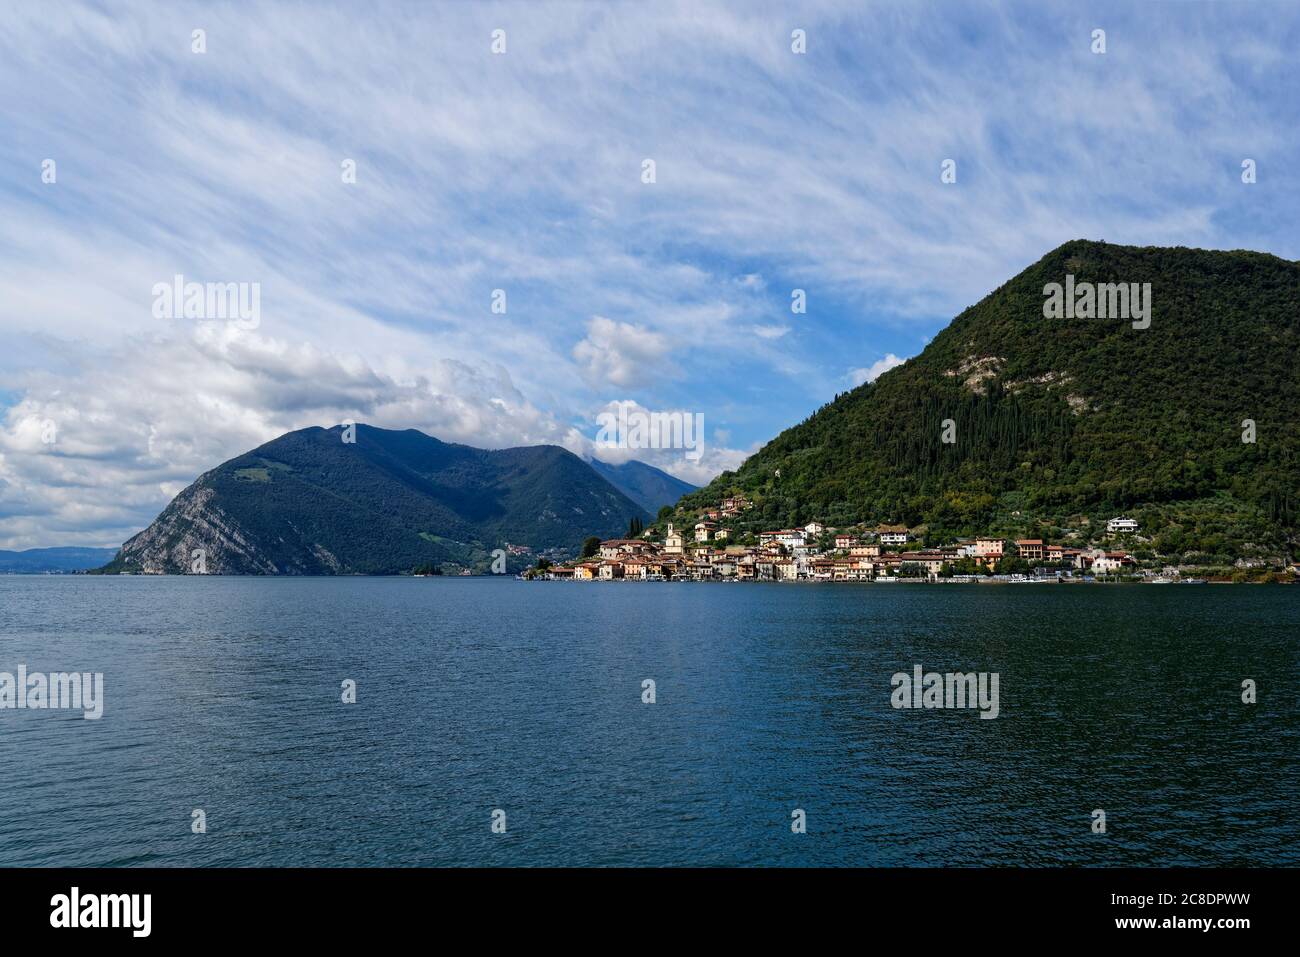 Italy, Lombardy, Monte Isola, Sulzano, Lake Iseo surrounded with mountains Stock Photo